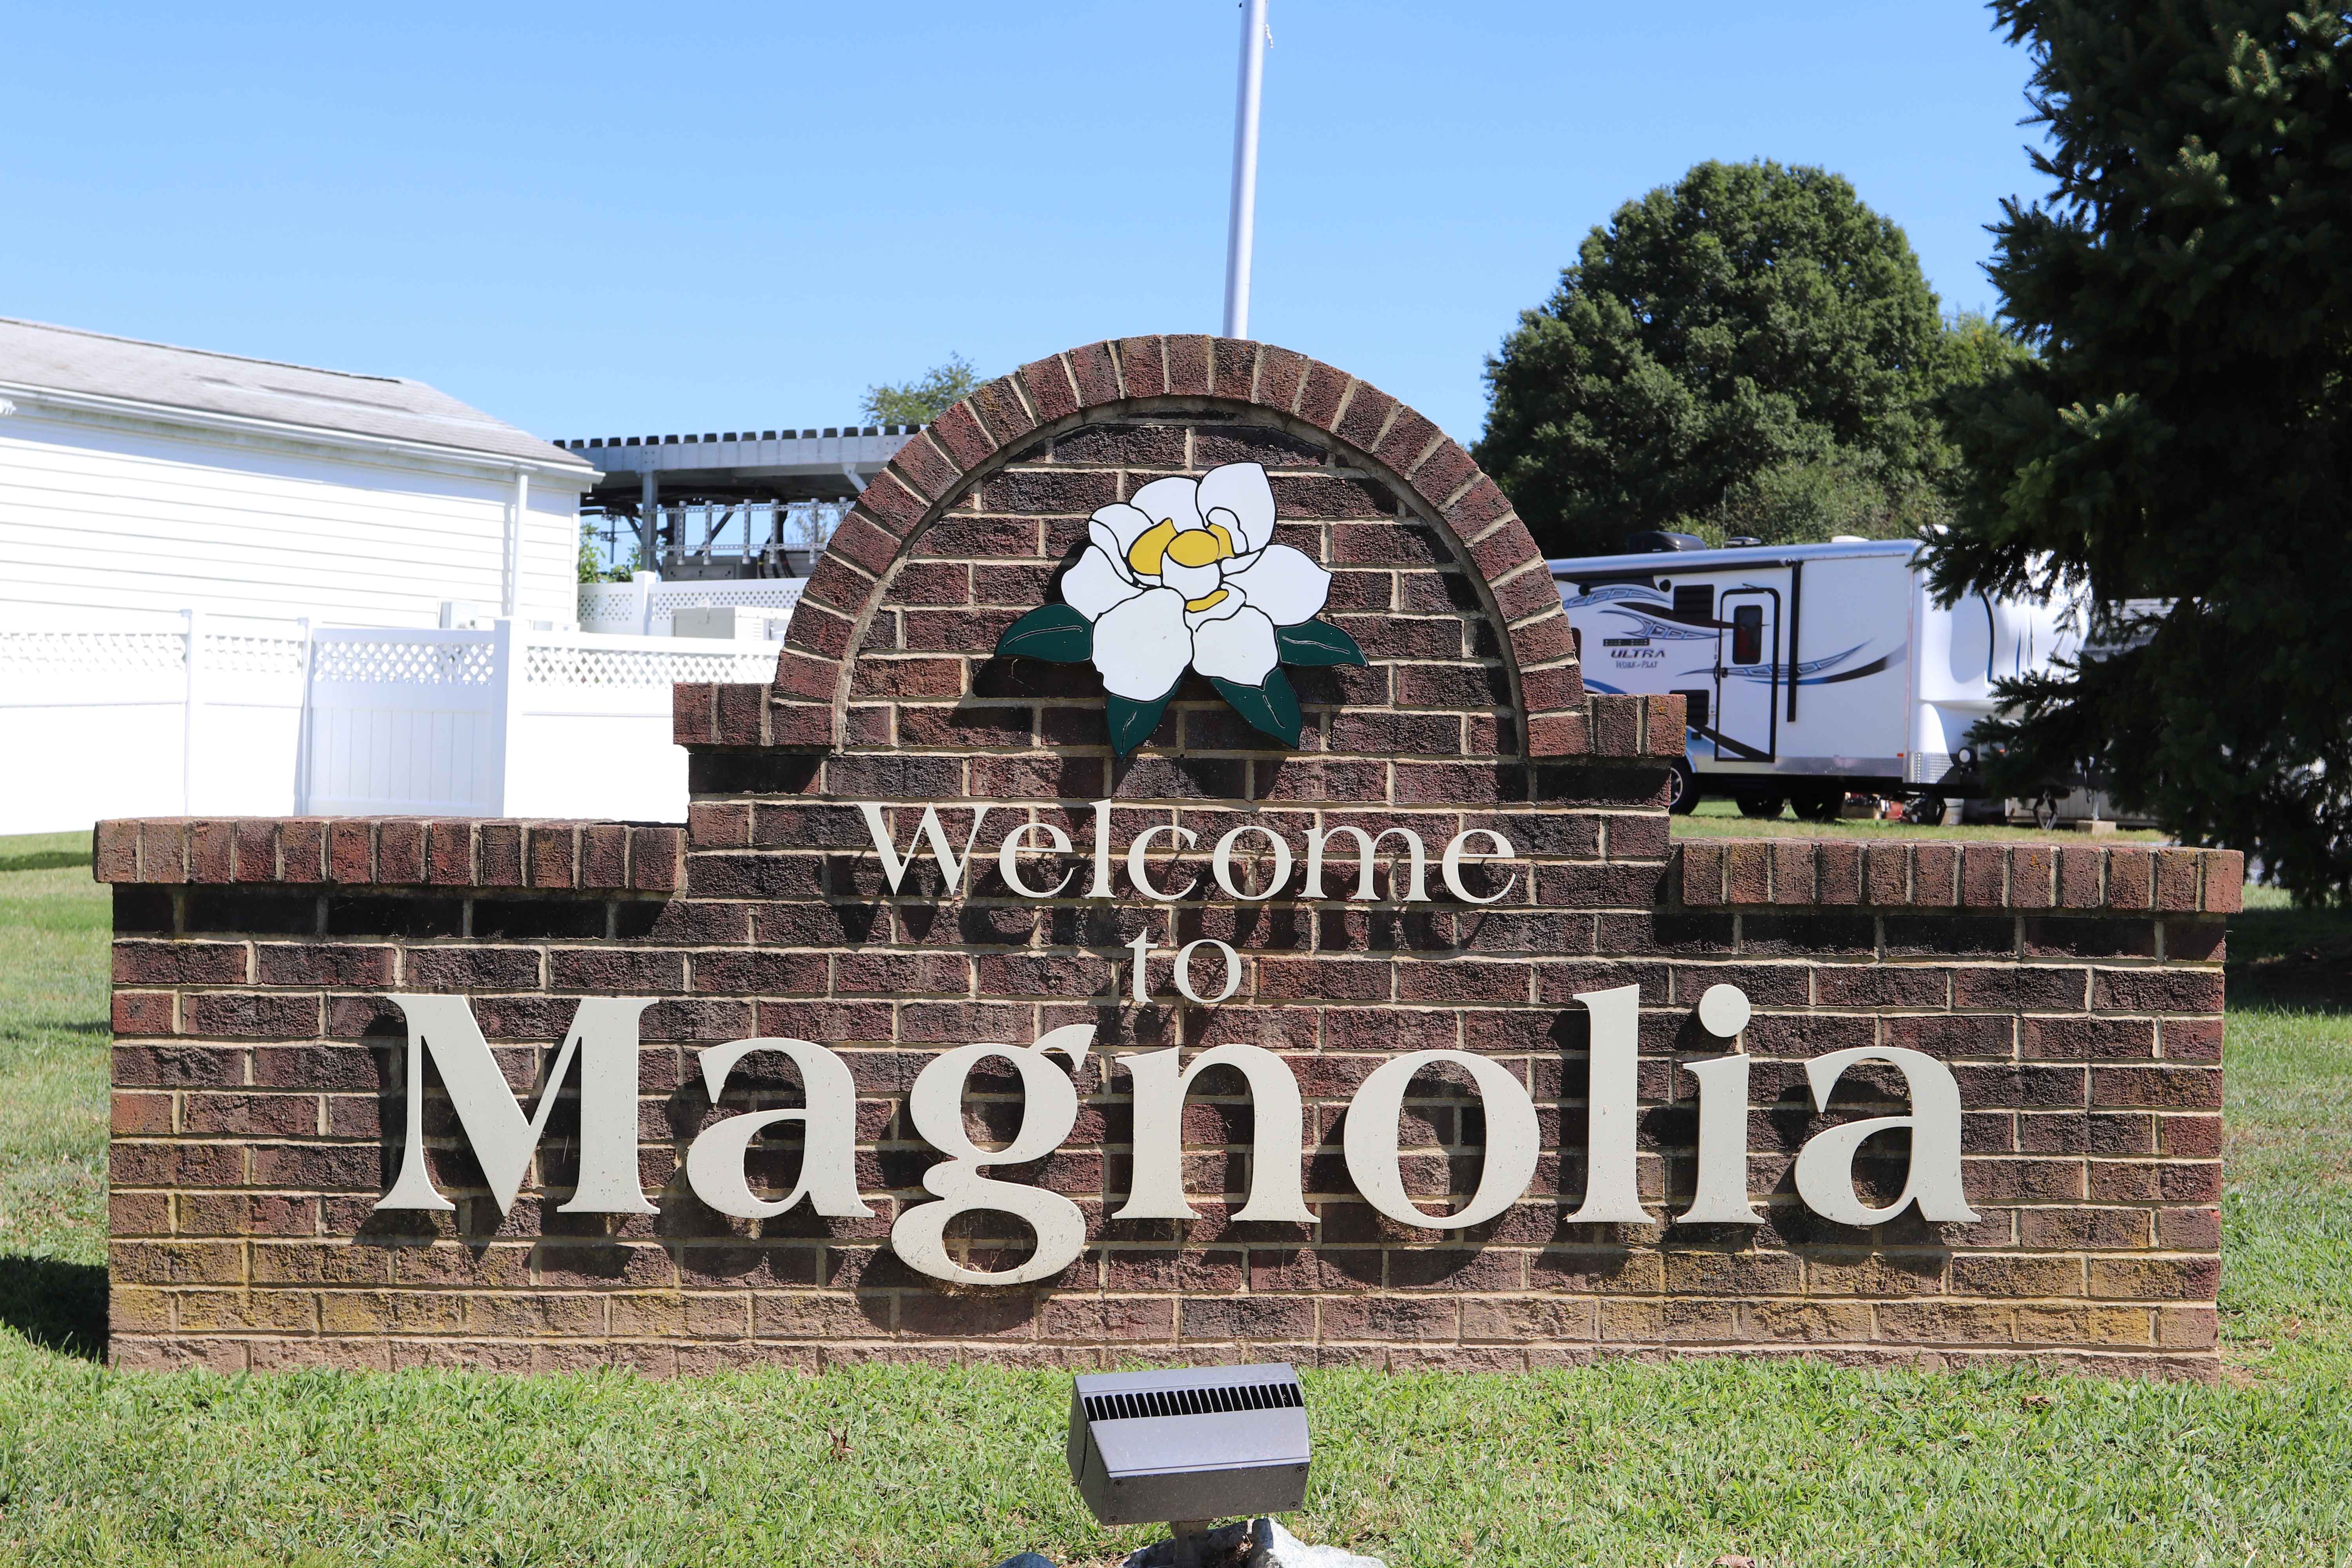 Welcome to Magnolia Delaware